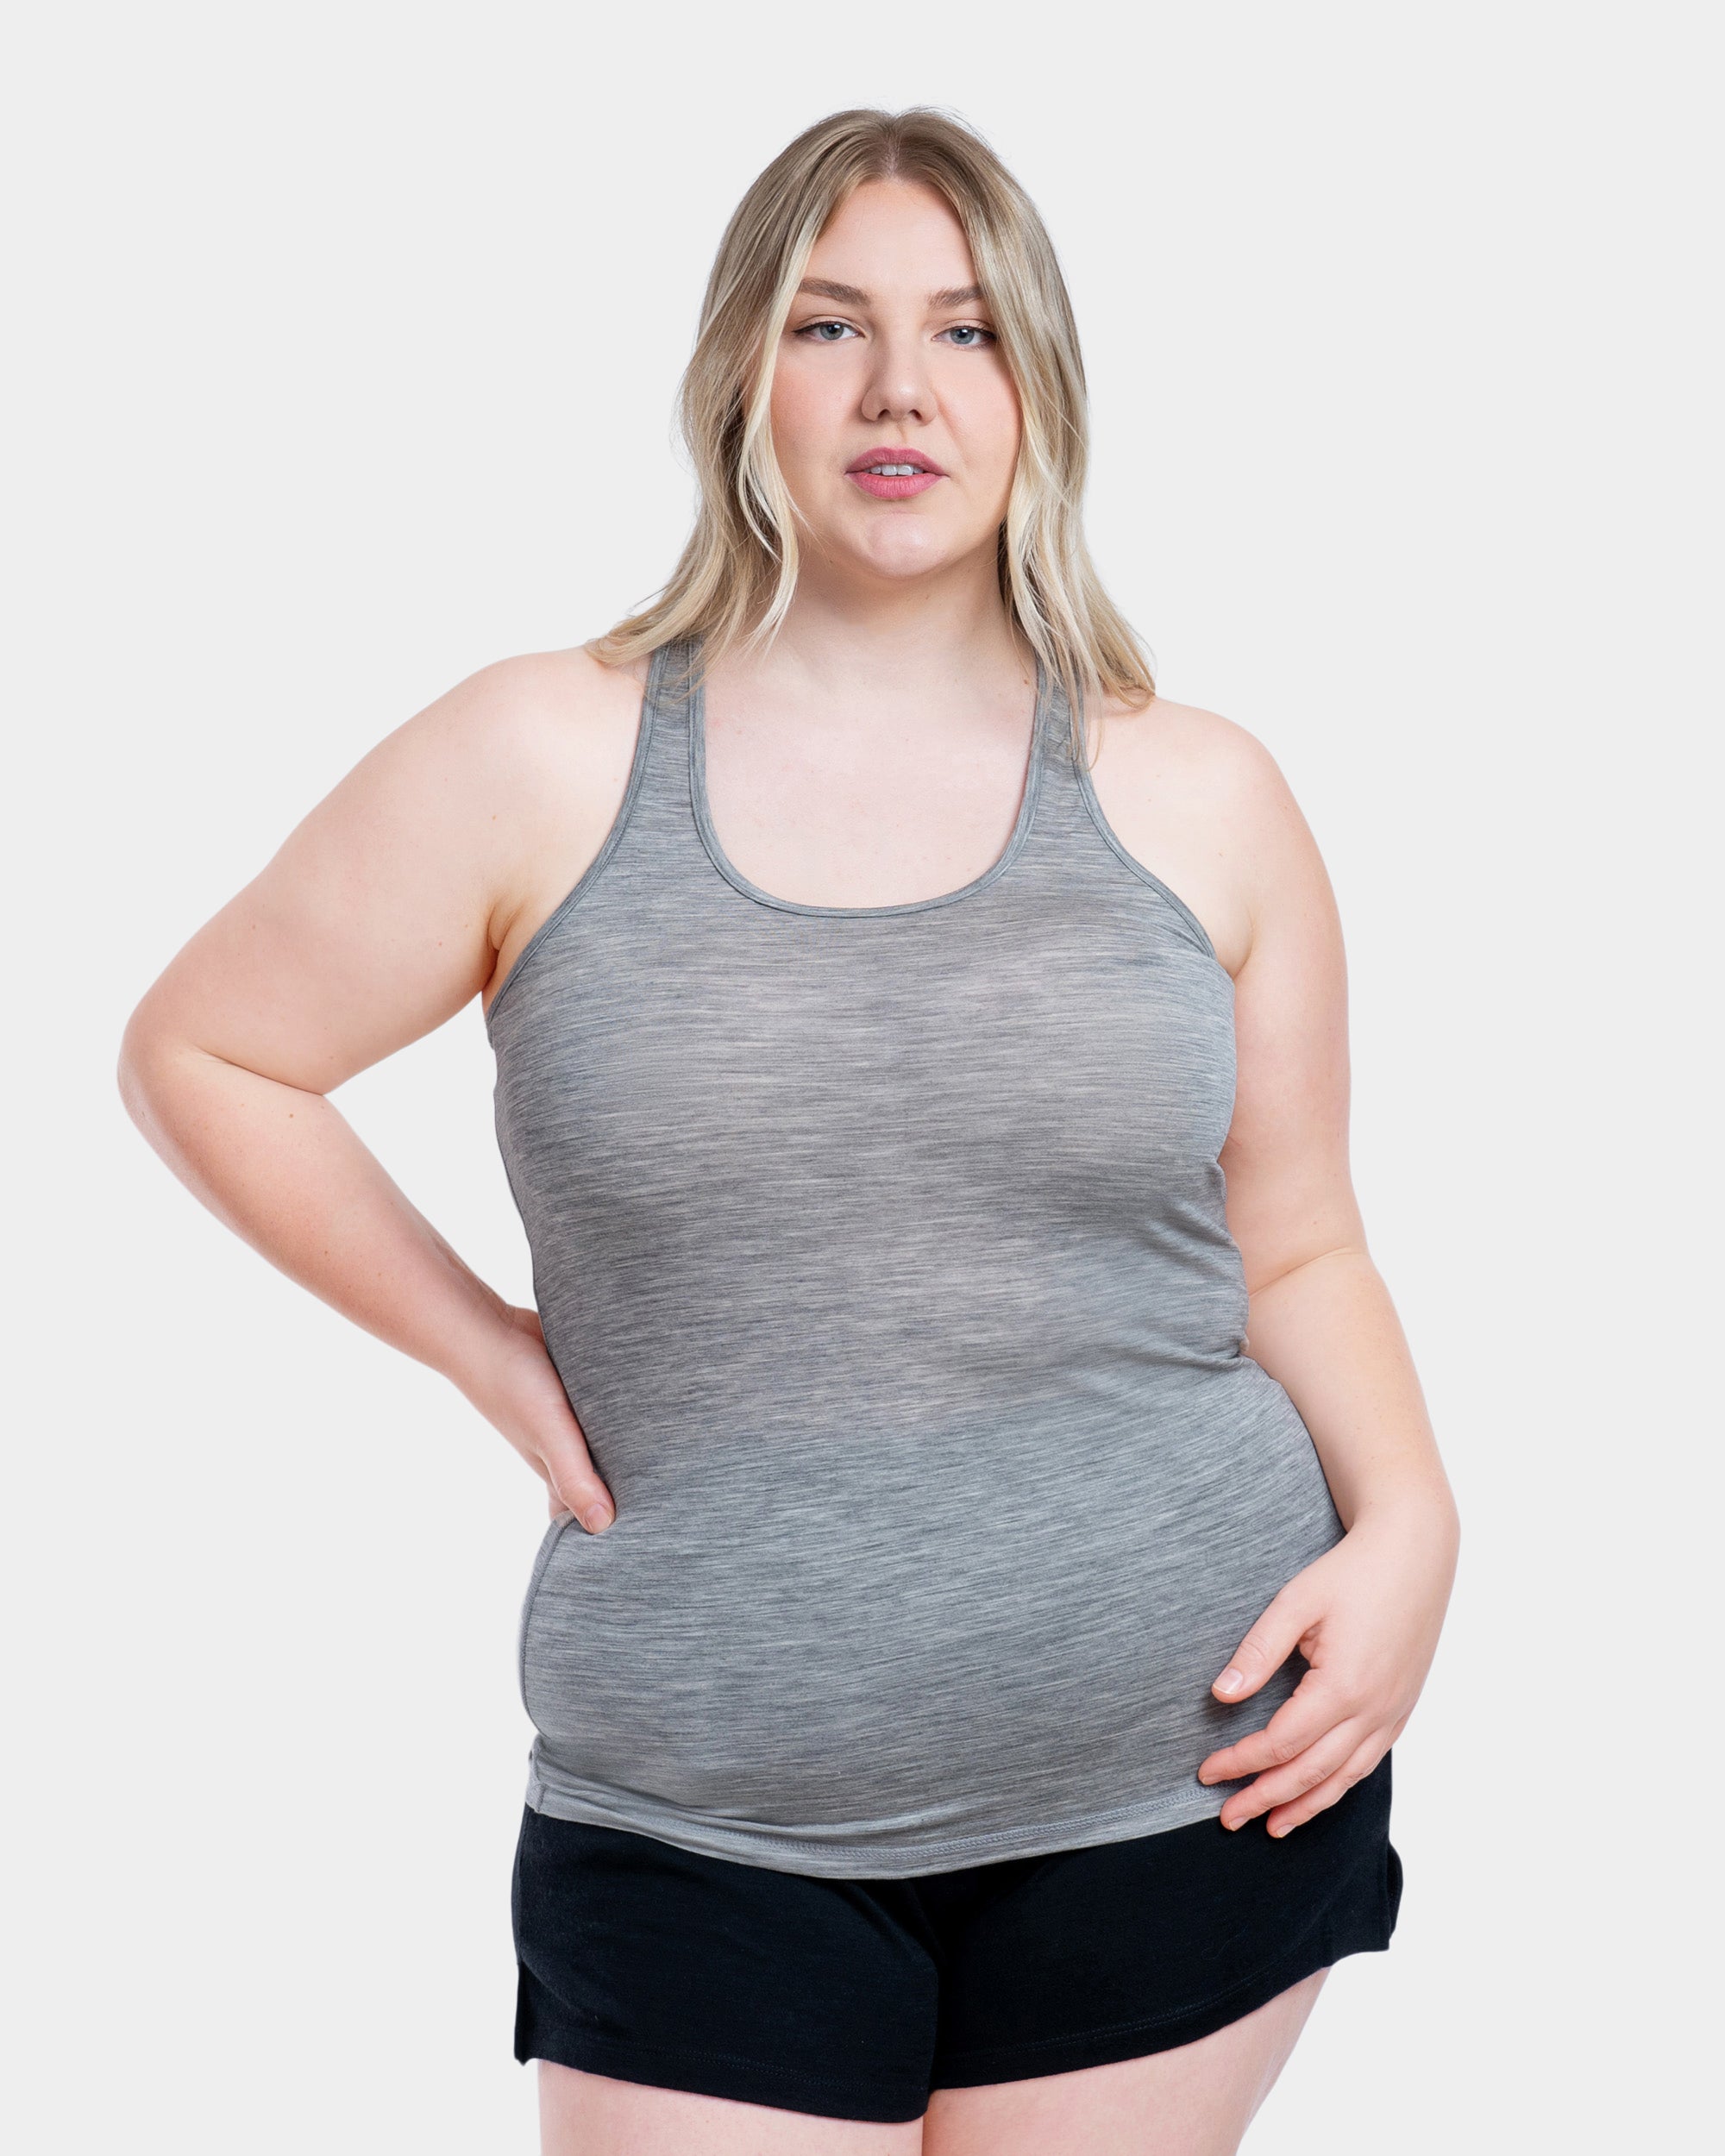 Merino Wool Yoga Tank Top Sleeveless Tank Tops for Women Yoga Wear